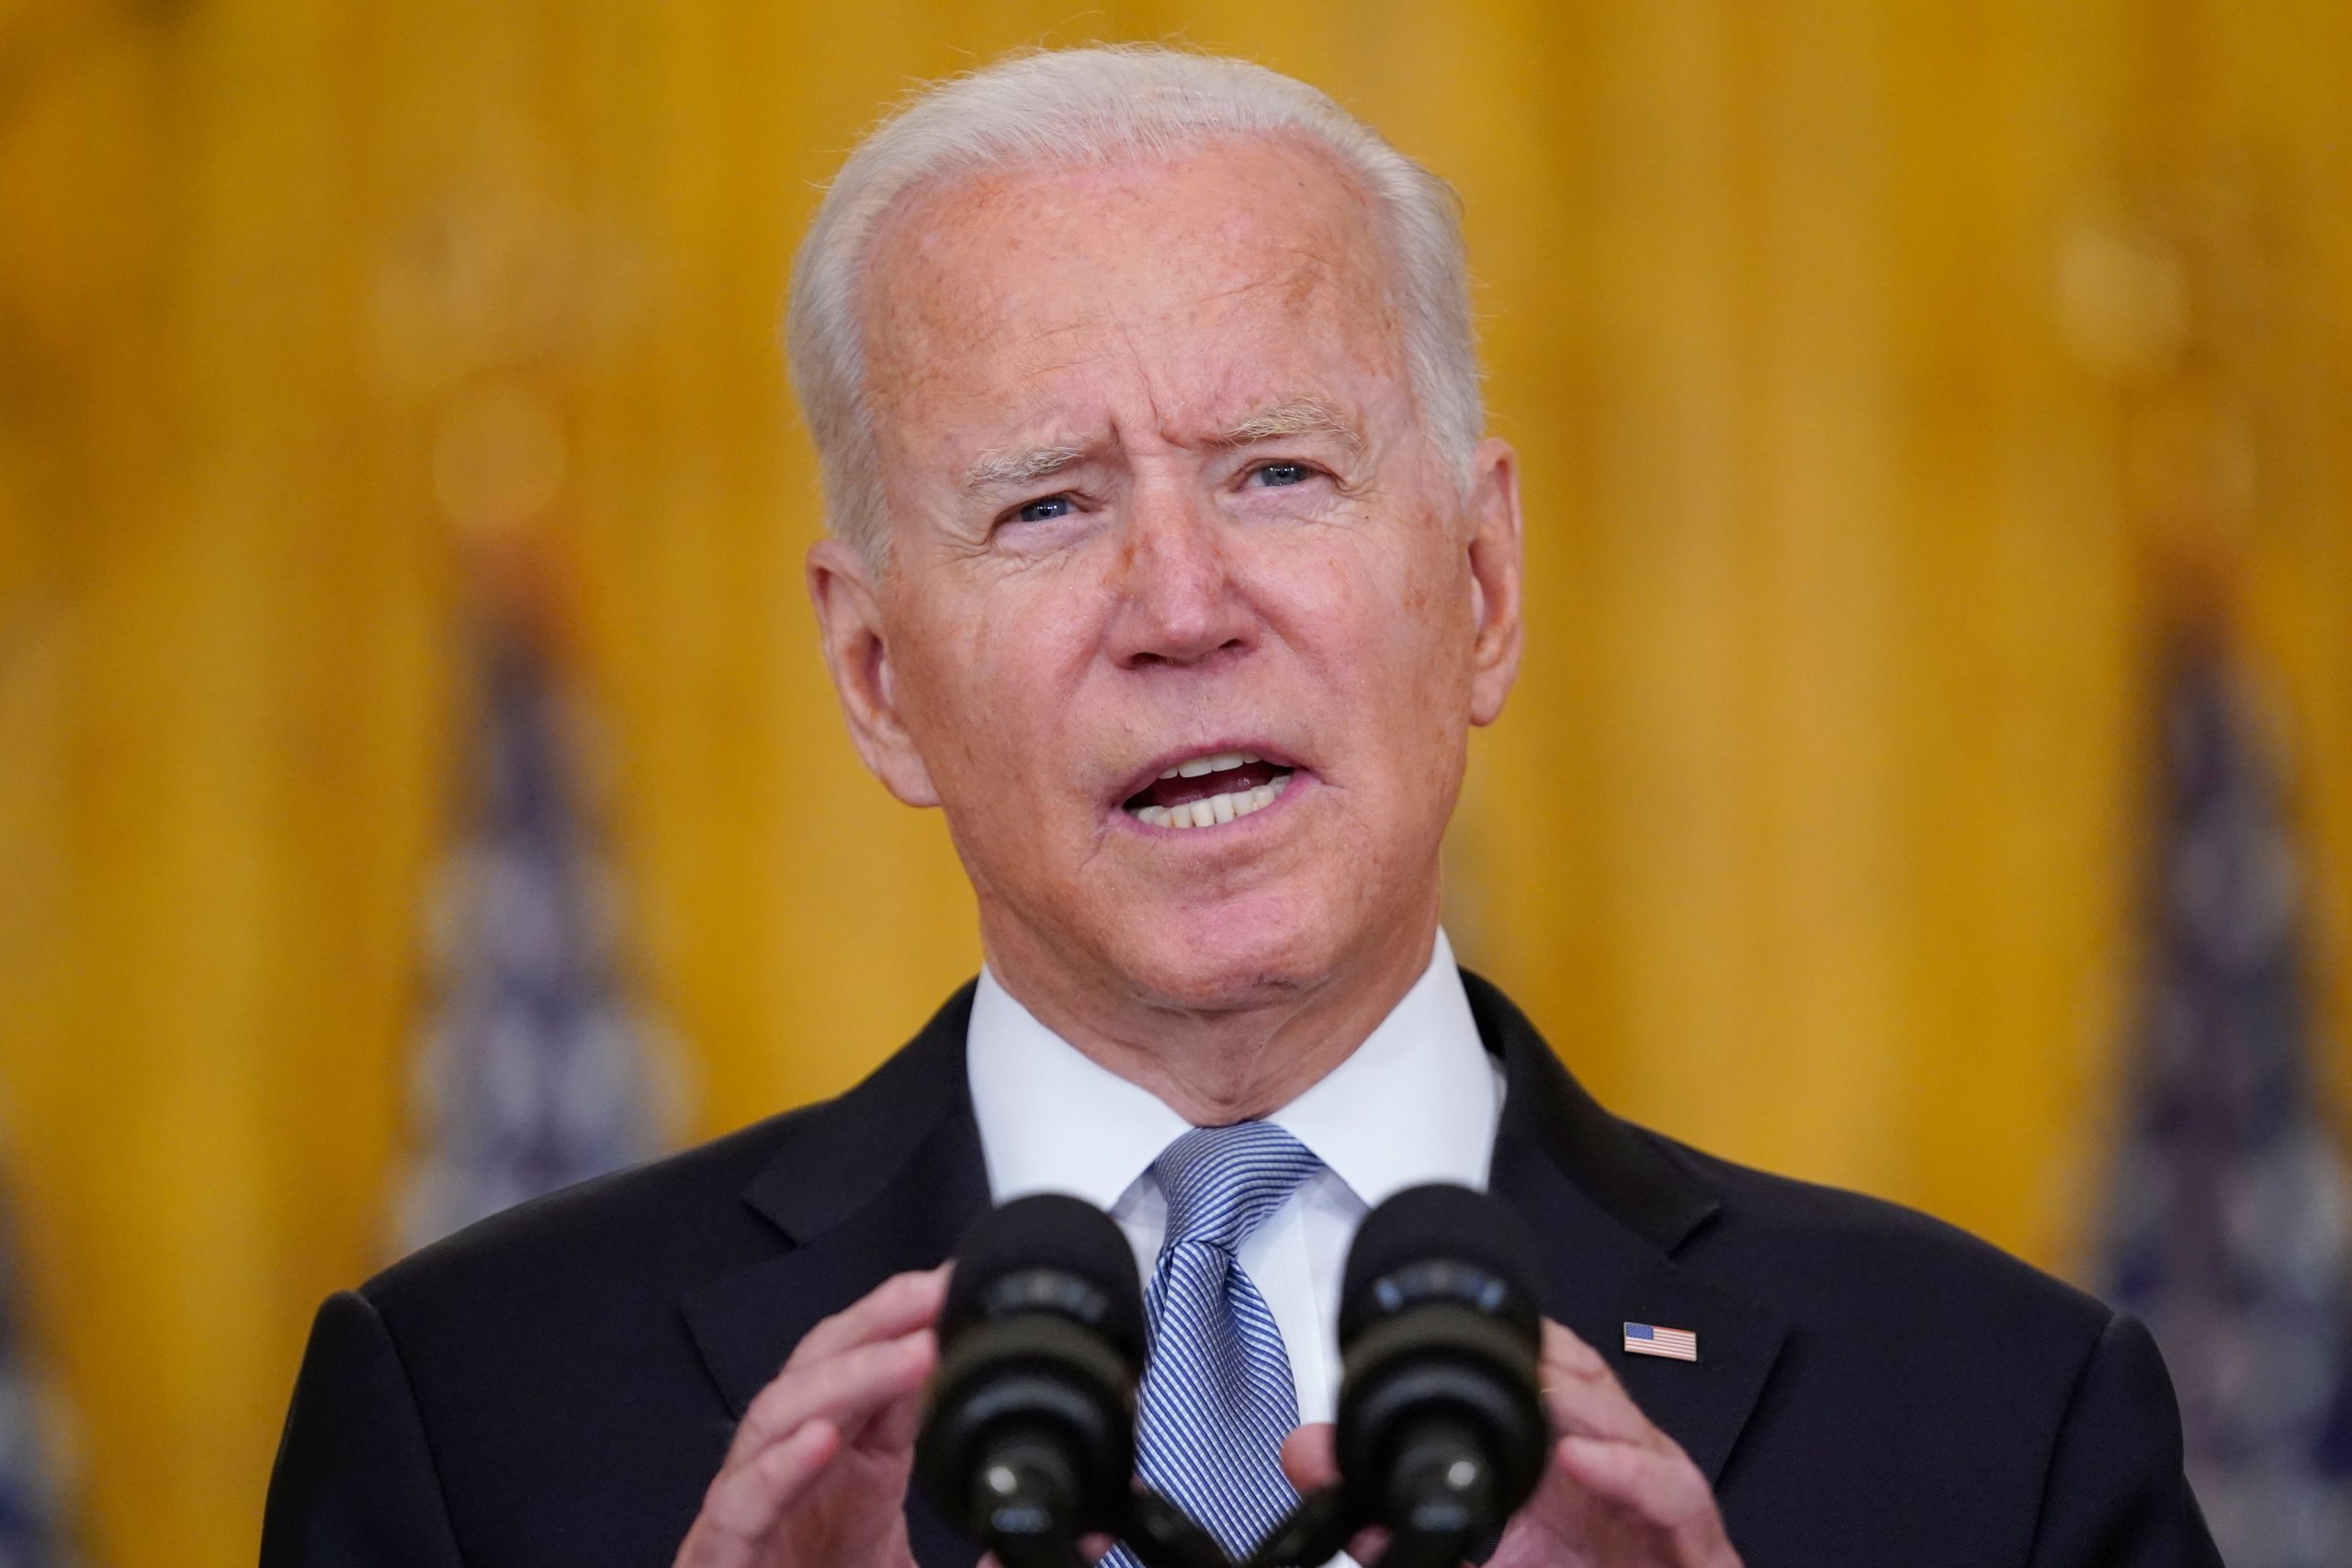 Its everybody’s crisis: Joe Biden’s climate change warning following Ida